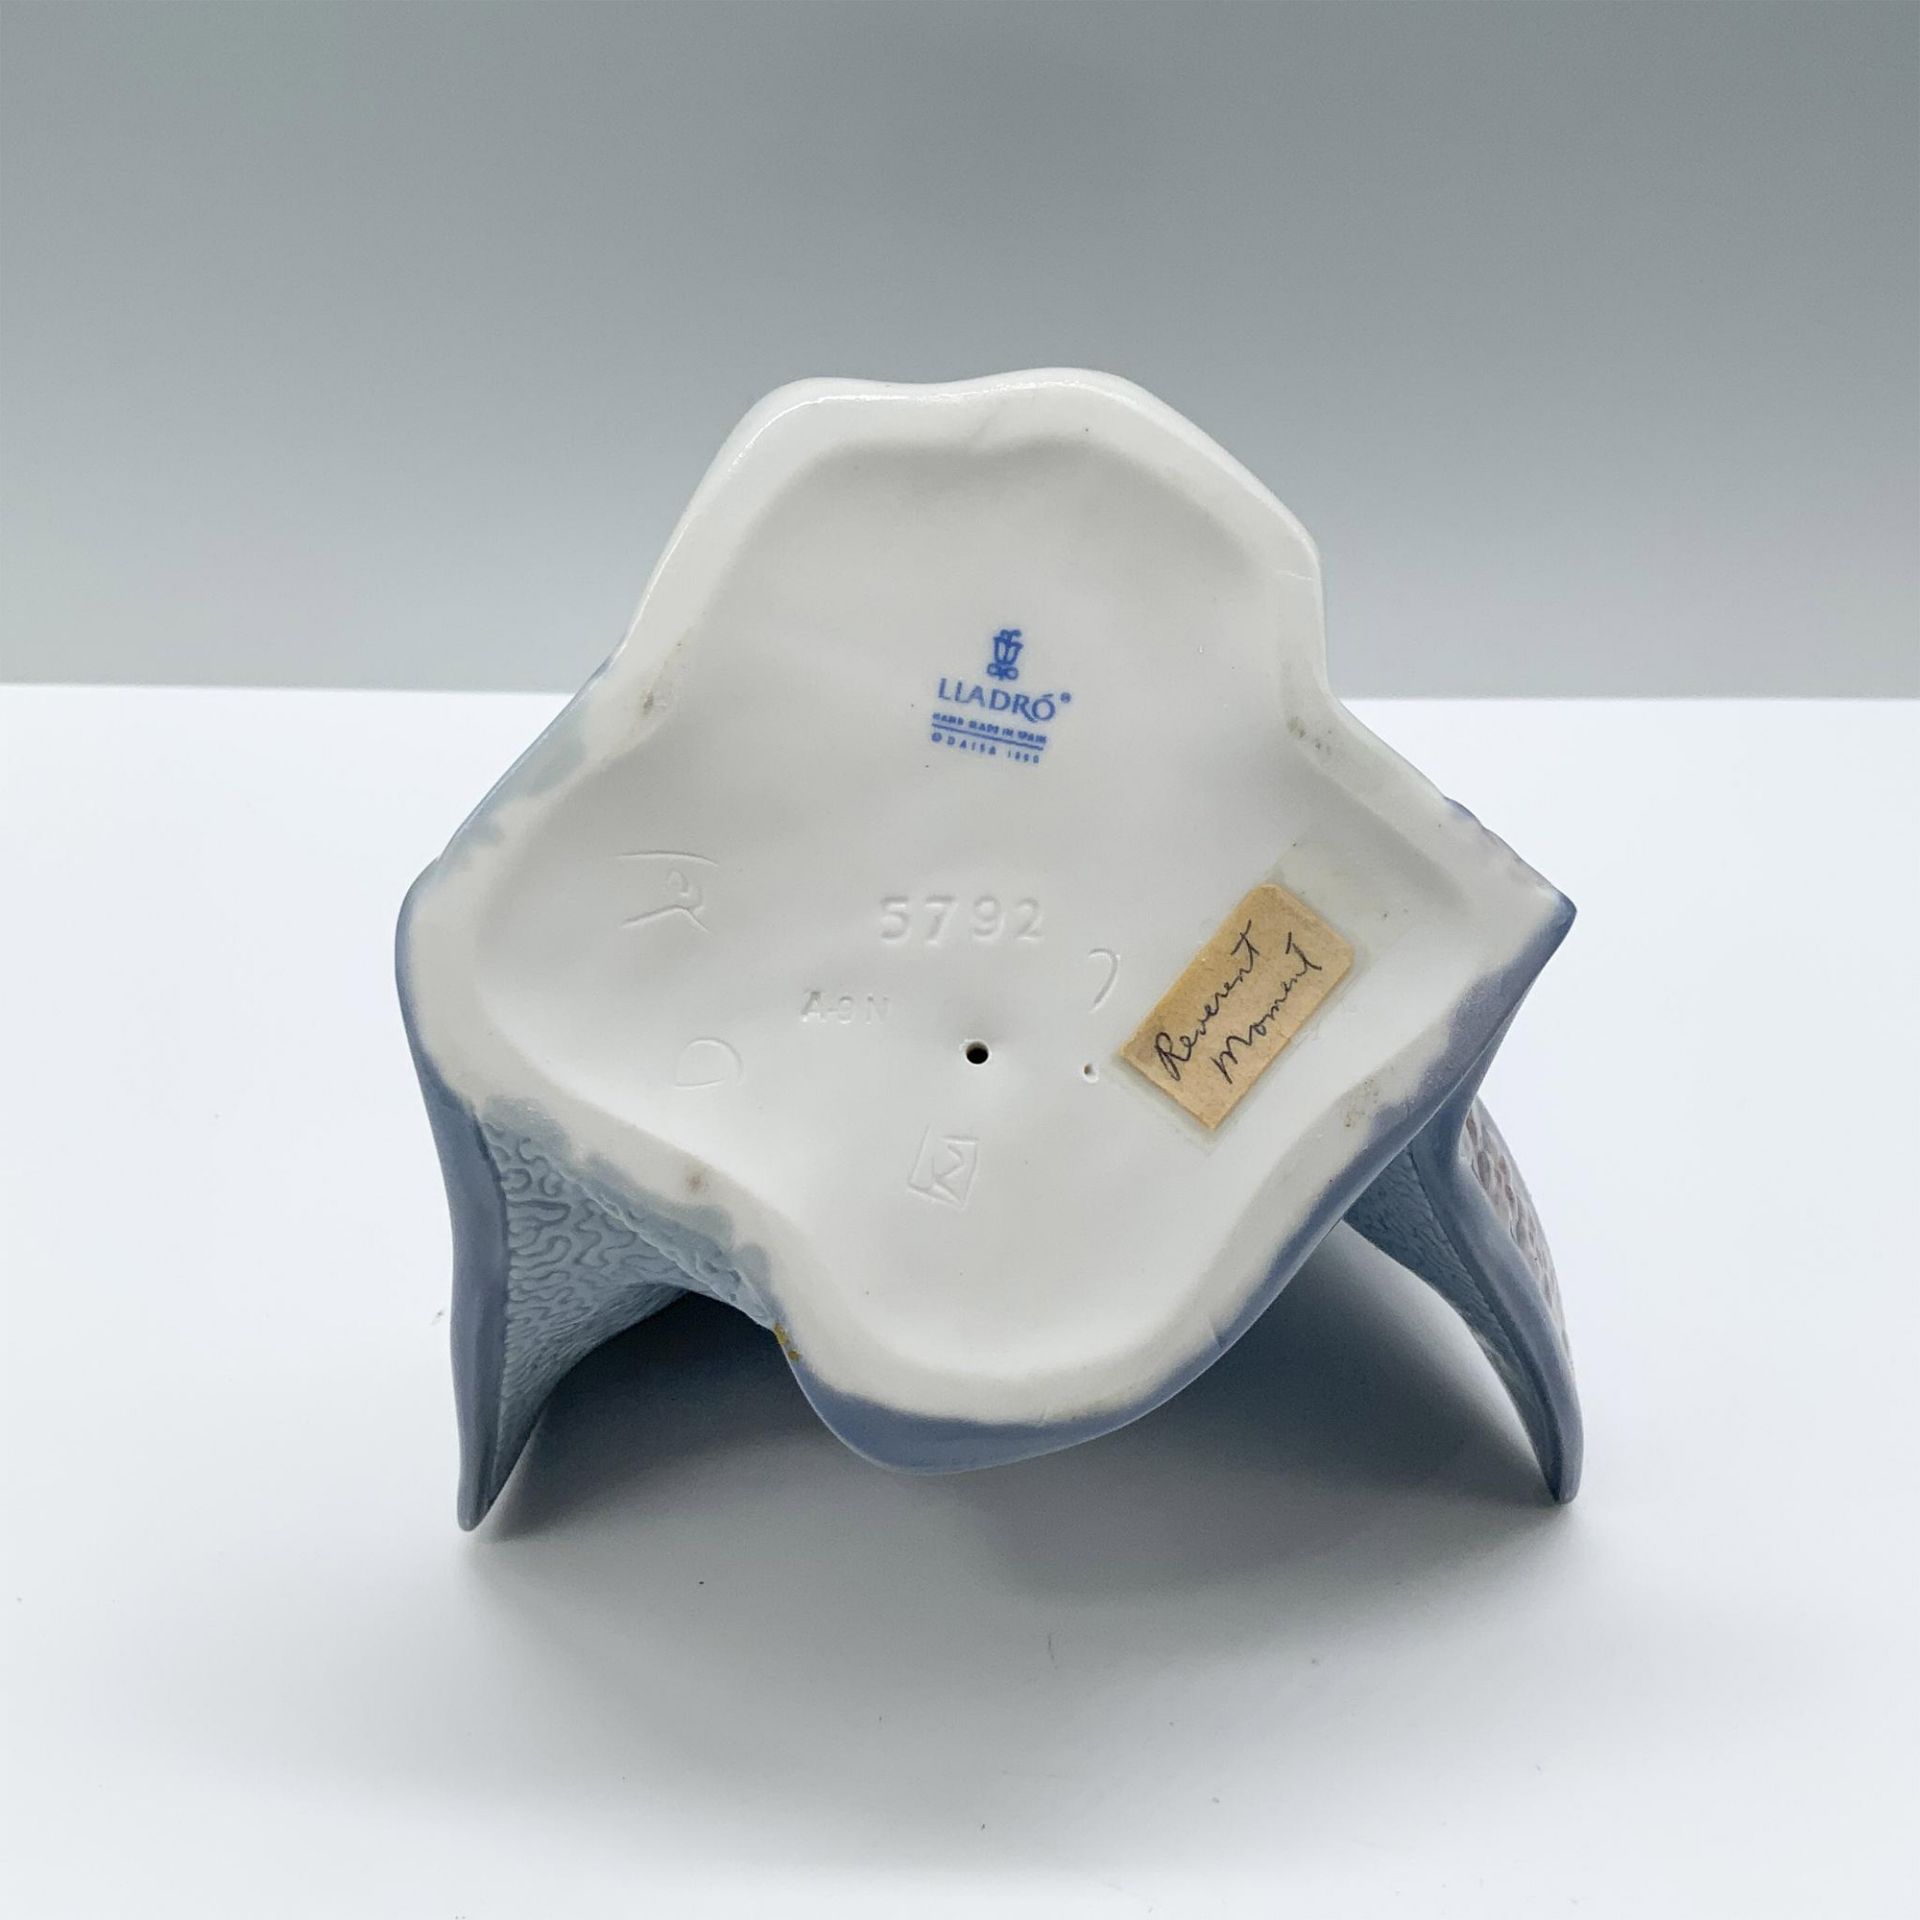 Reverent Moment 1005792 - Lladro Porcelain Figurine - Image 3 of 4